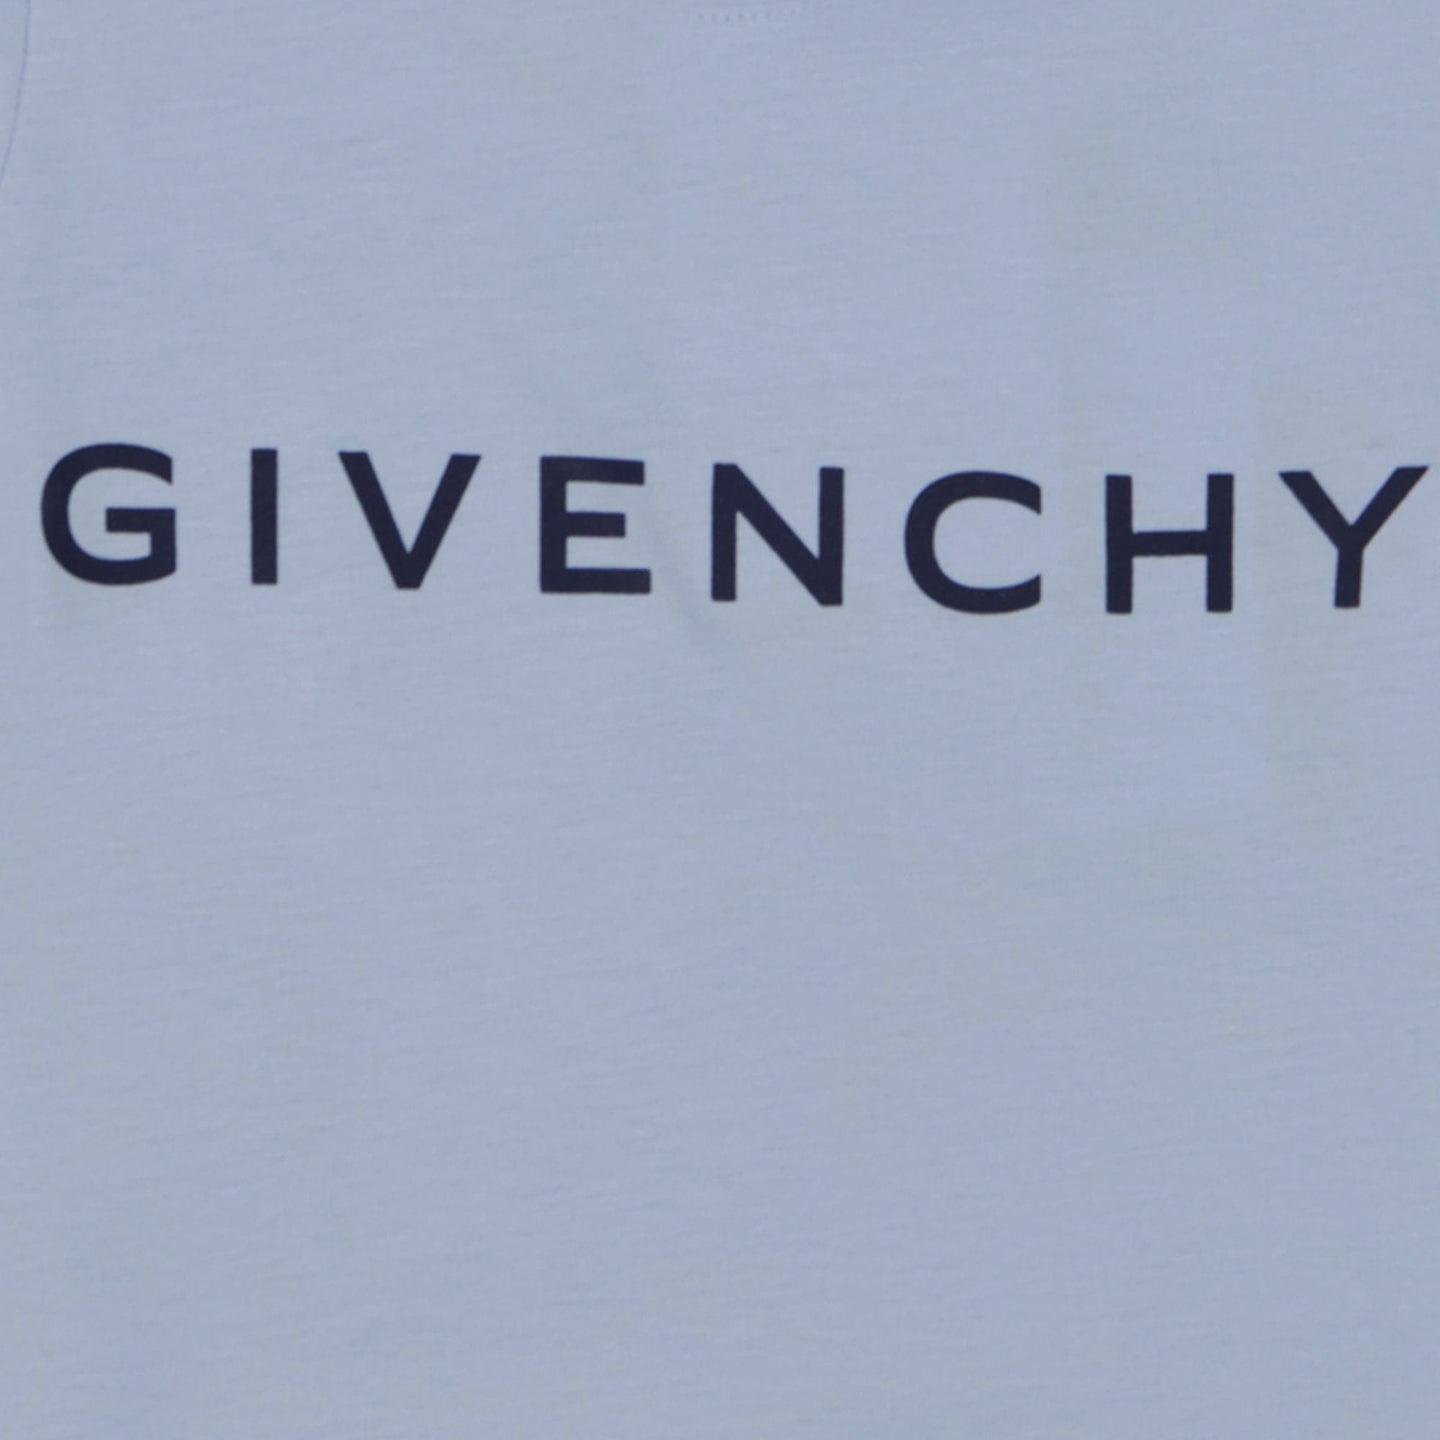 Givenchy Baby Jongens T-shirt Licht Blauw 6 mnd